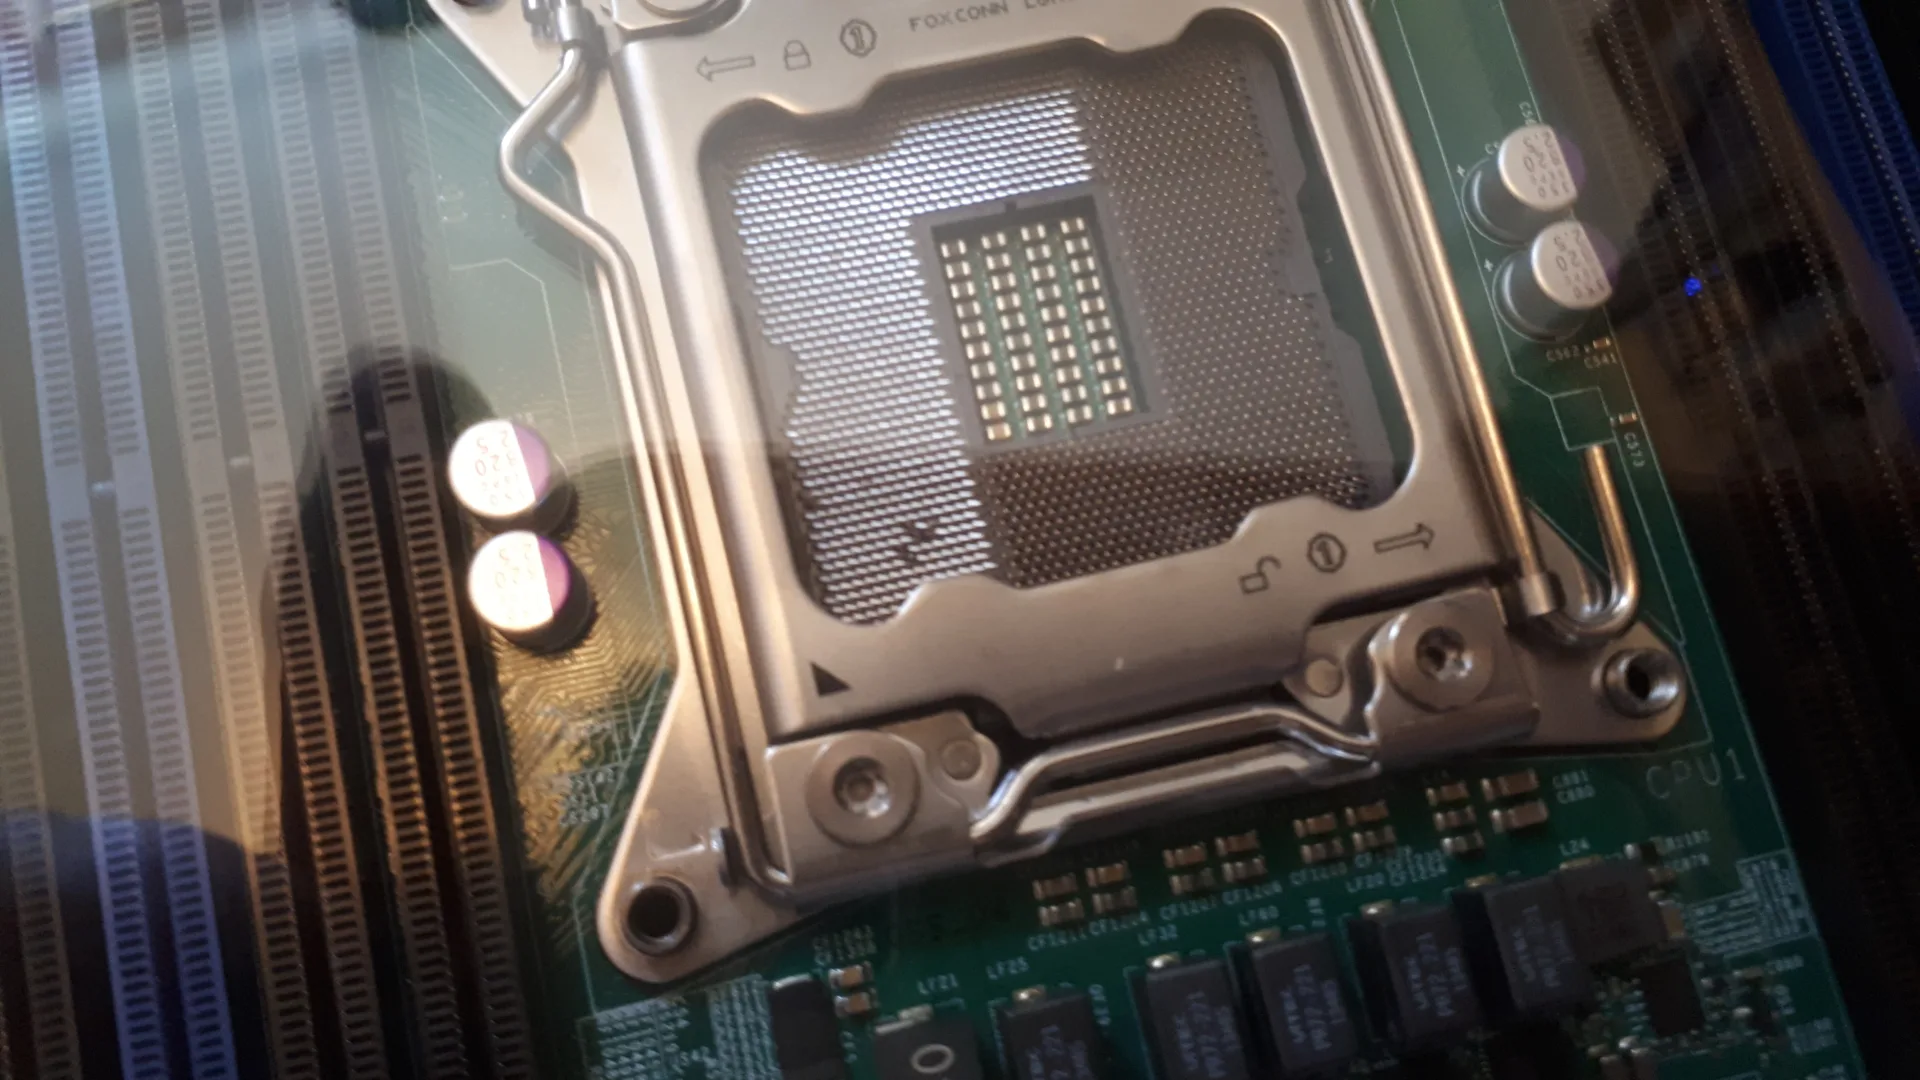 CPU socket with damaged pins